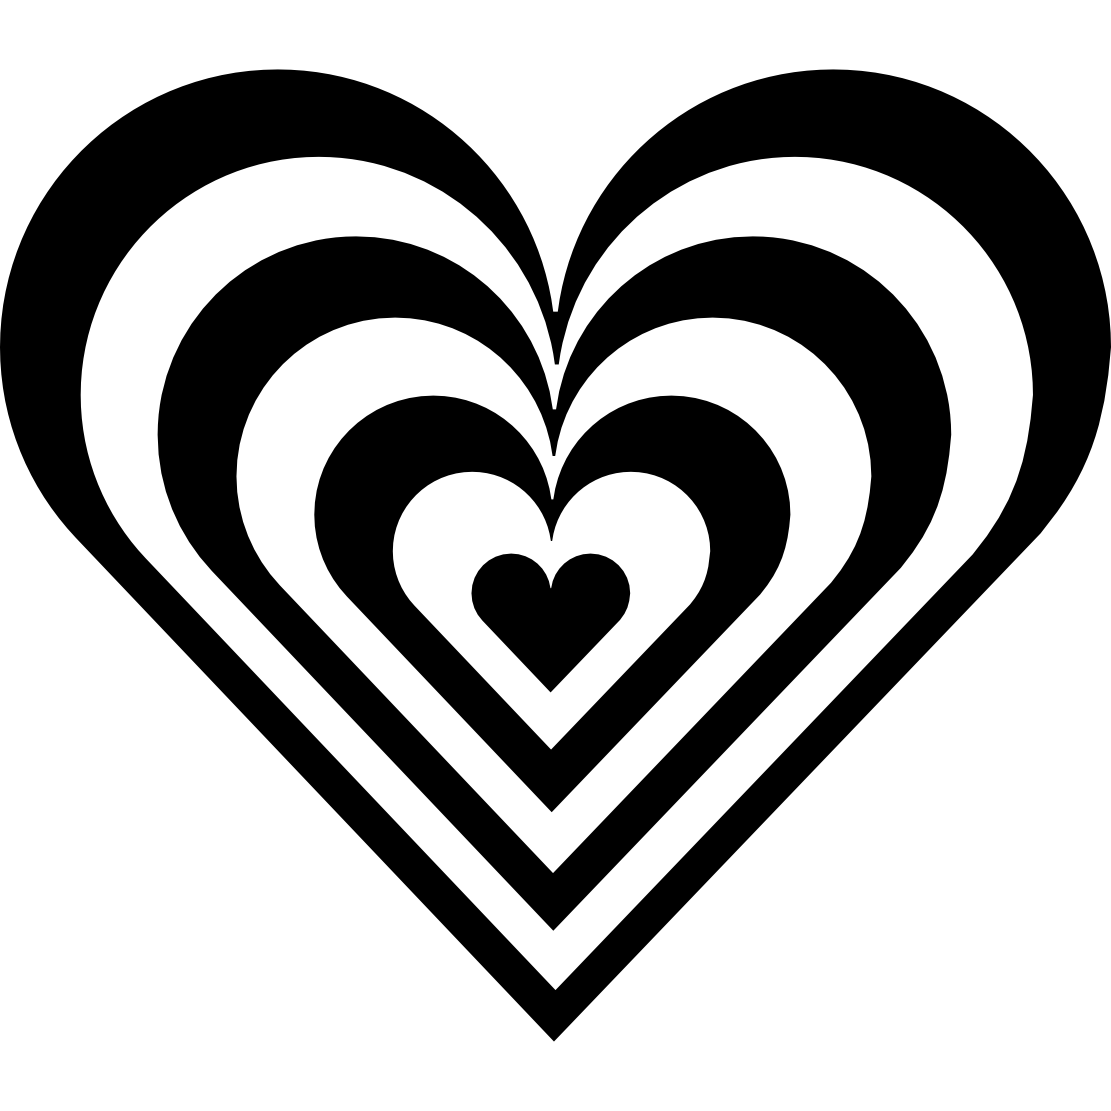 ... Black And White Hearts Cl - Black And White Heart Clip Art